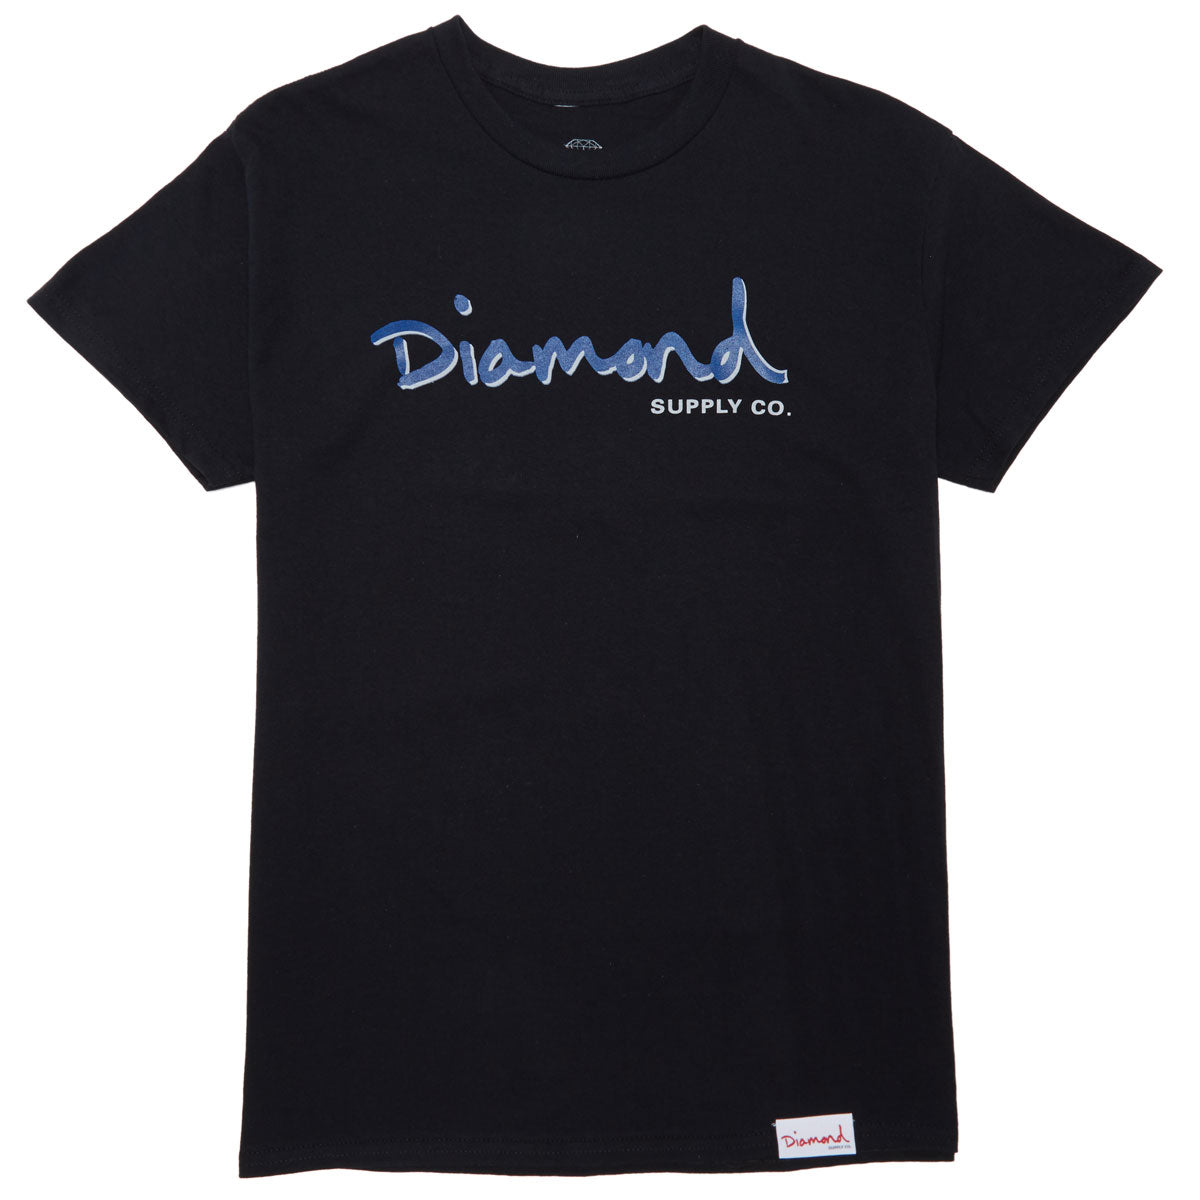 Diamond Supply Co. Outline T-Shirt - Black image 1